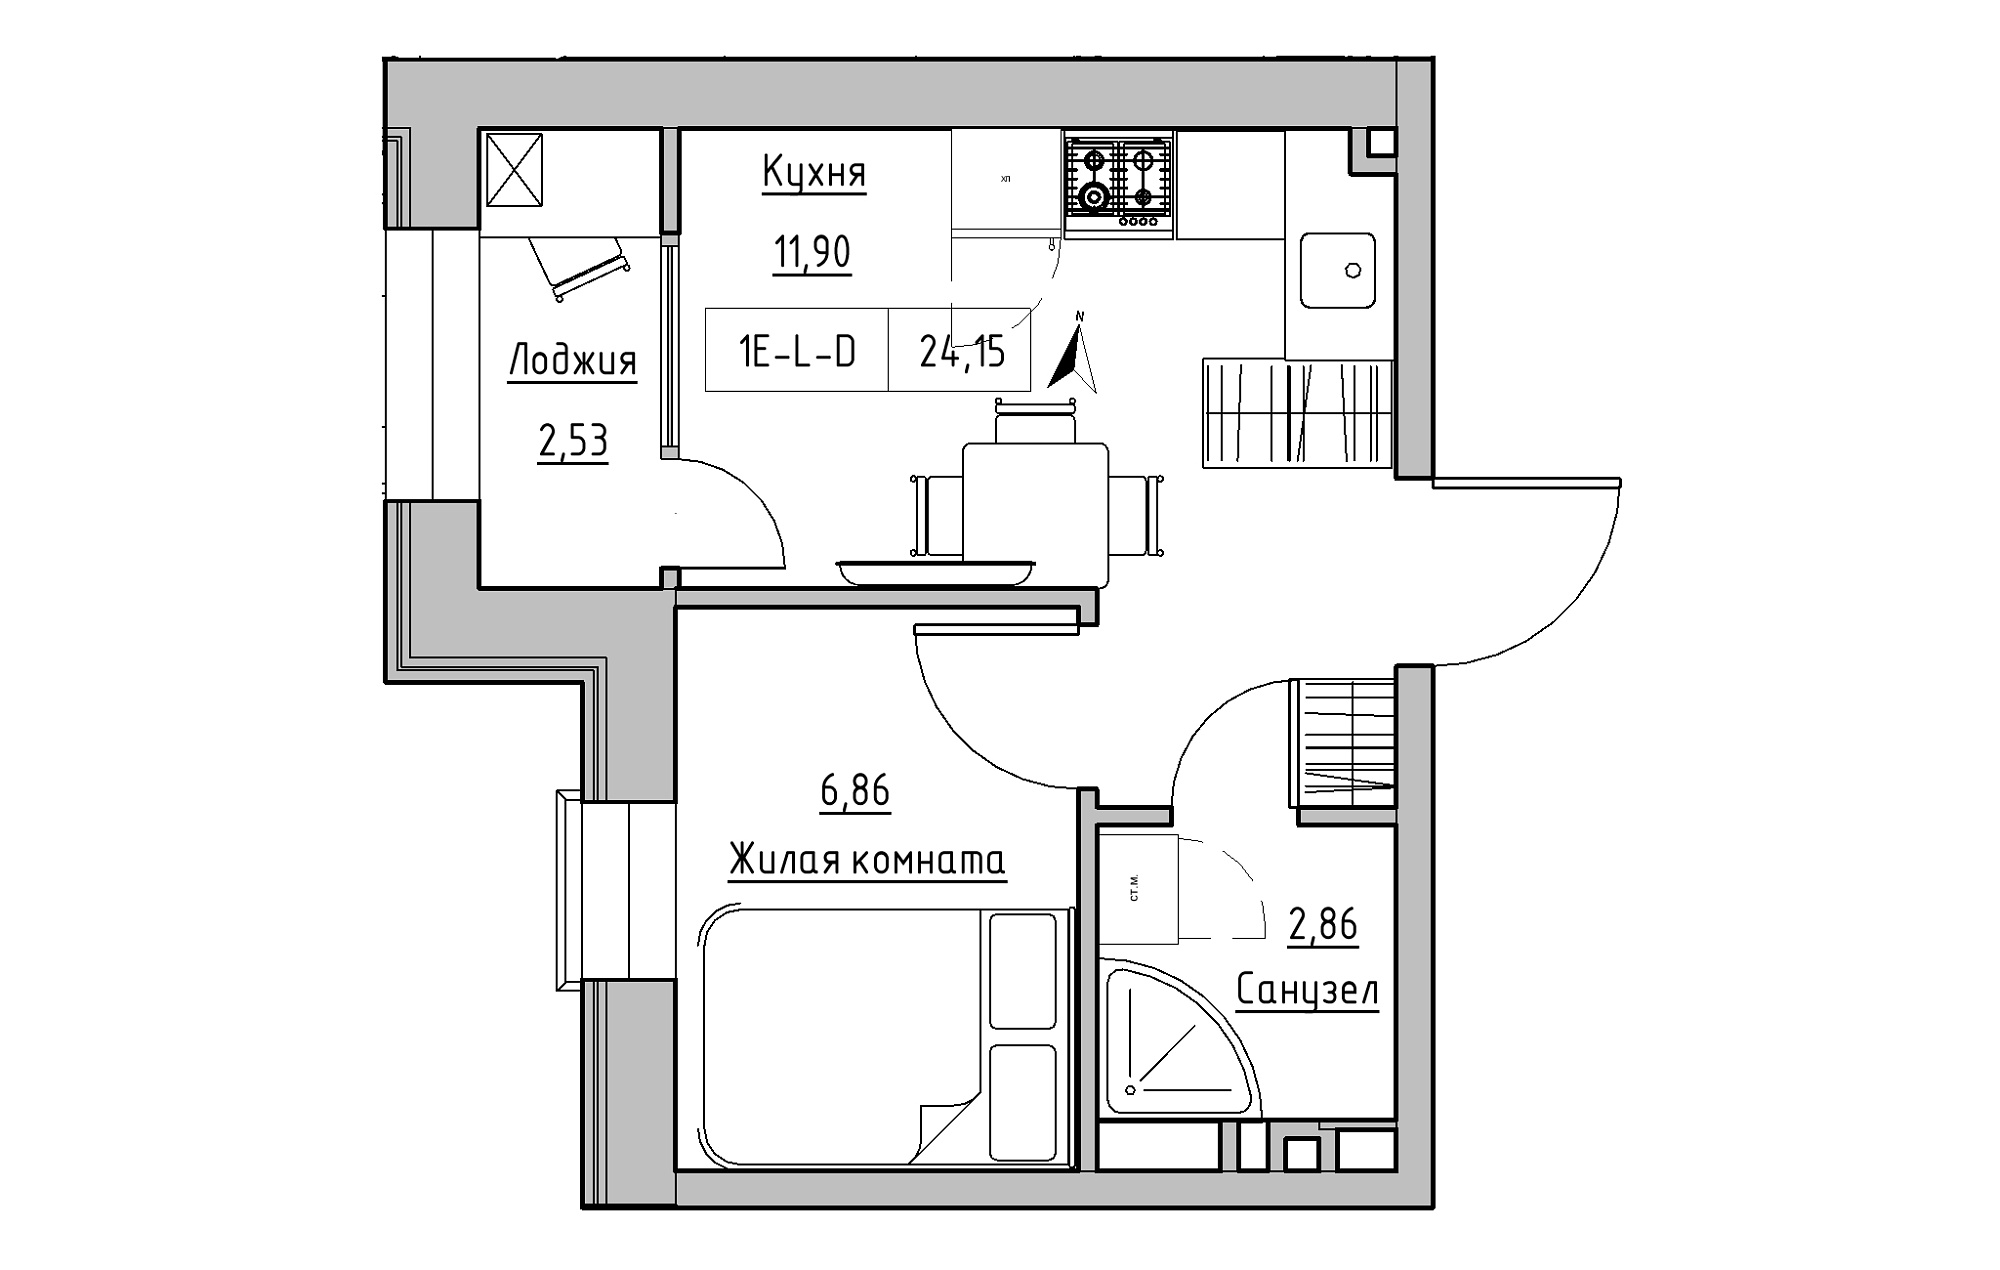 Planning 1-rm flats area 24.15m2, KS-019-03/0001.